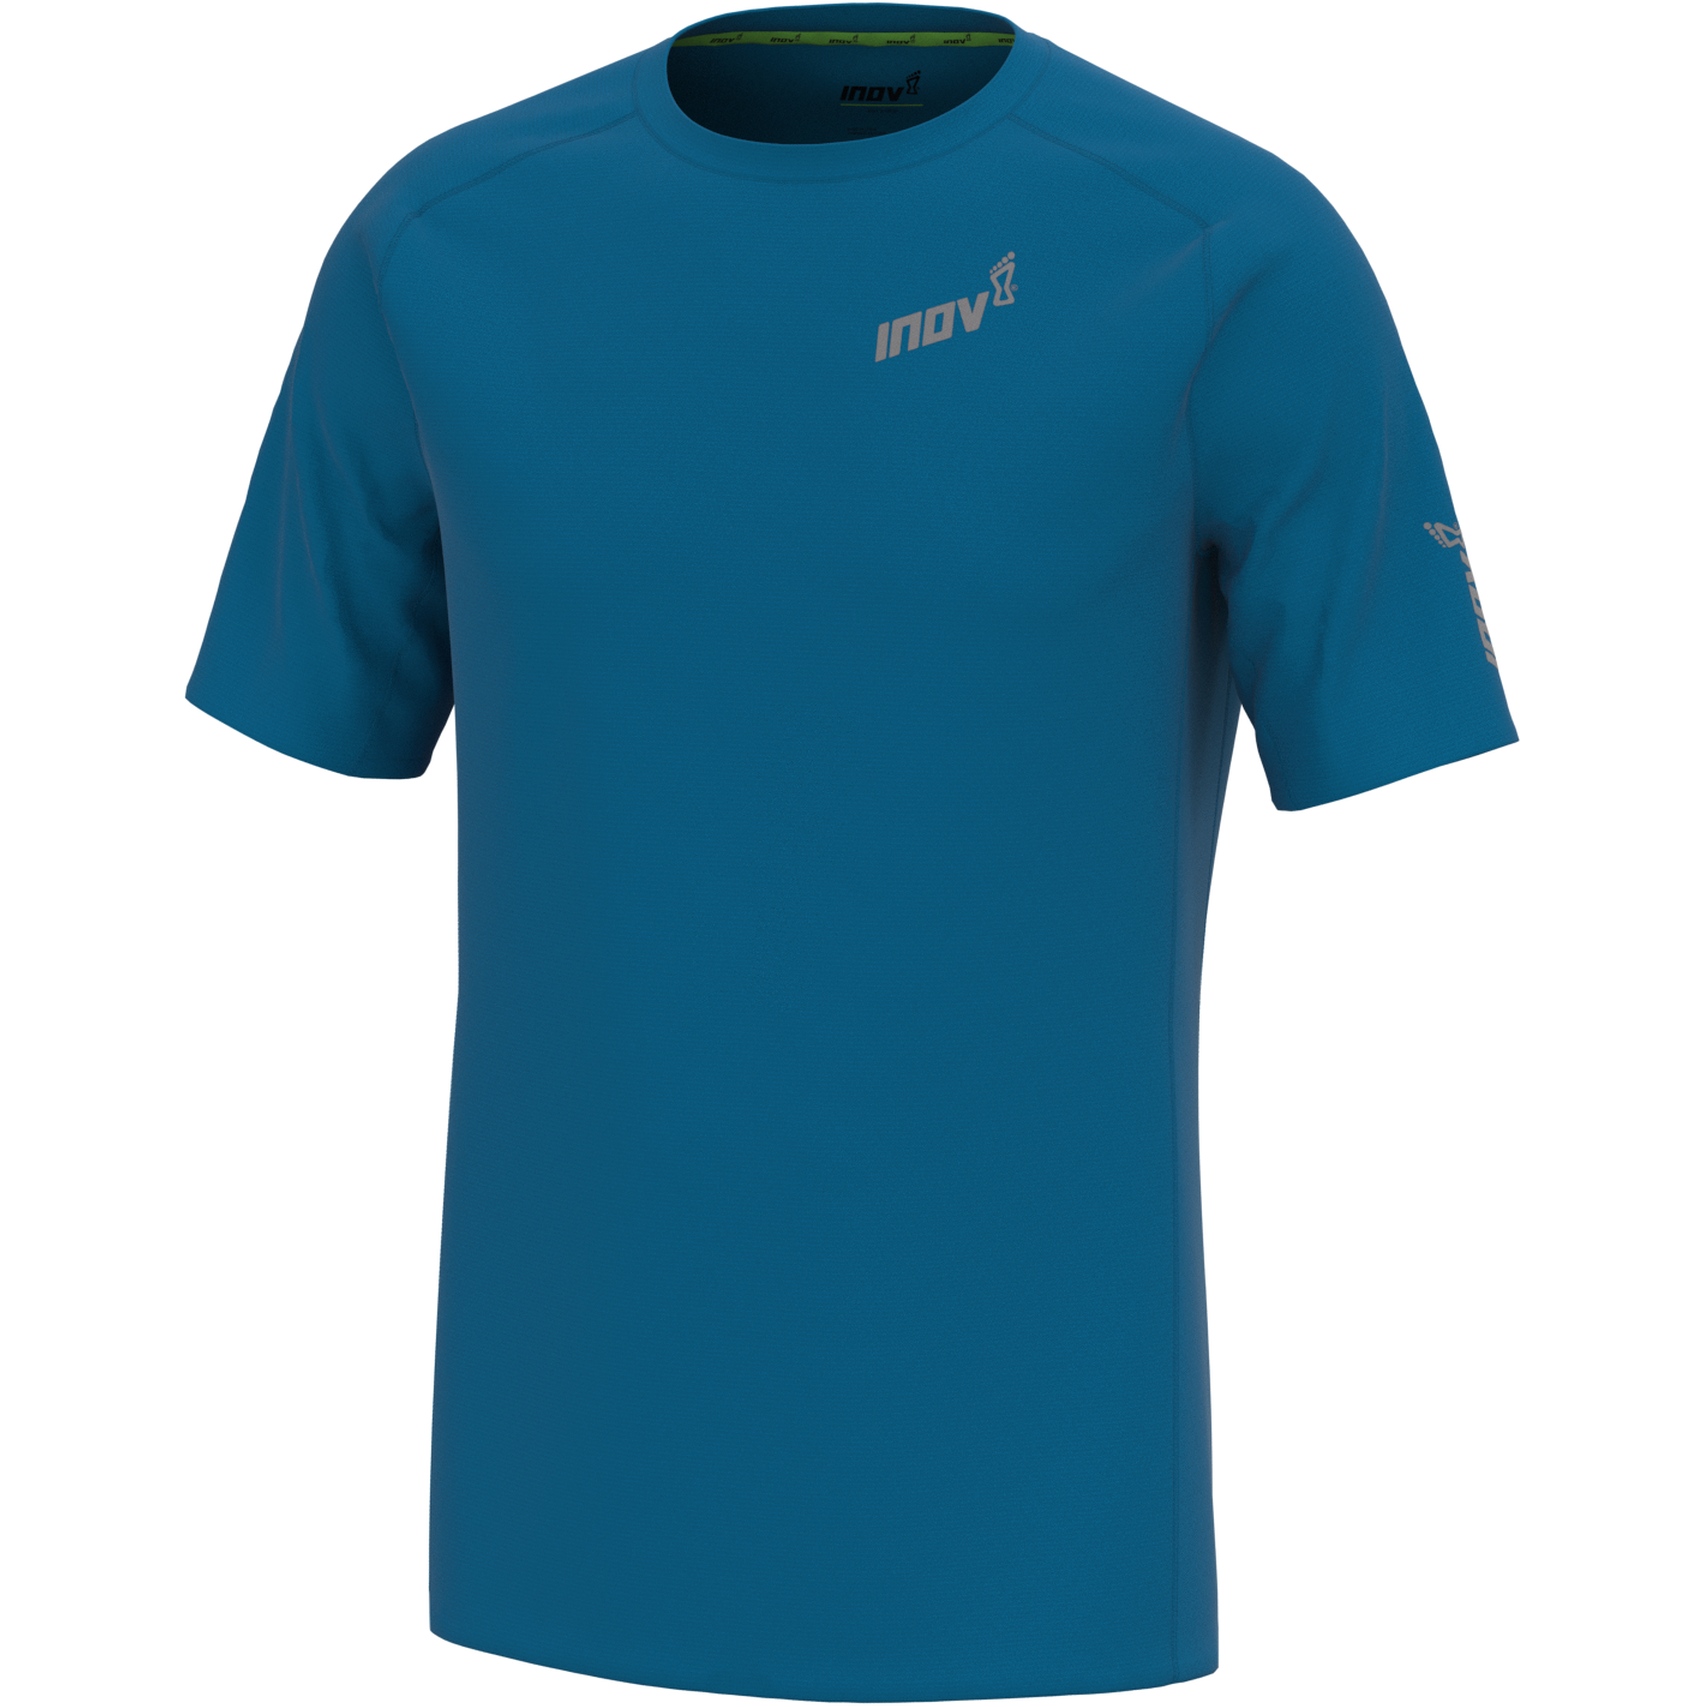 Productfoto van Inov-8 Base Elite Hardloopshirt - blauw